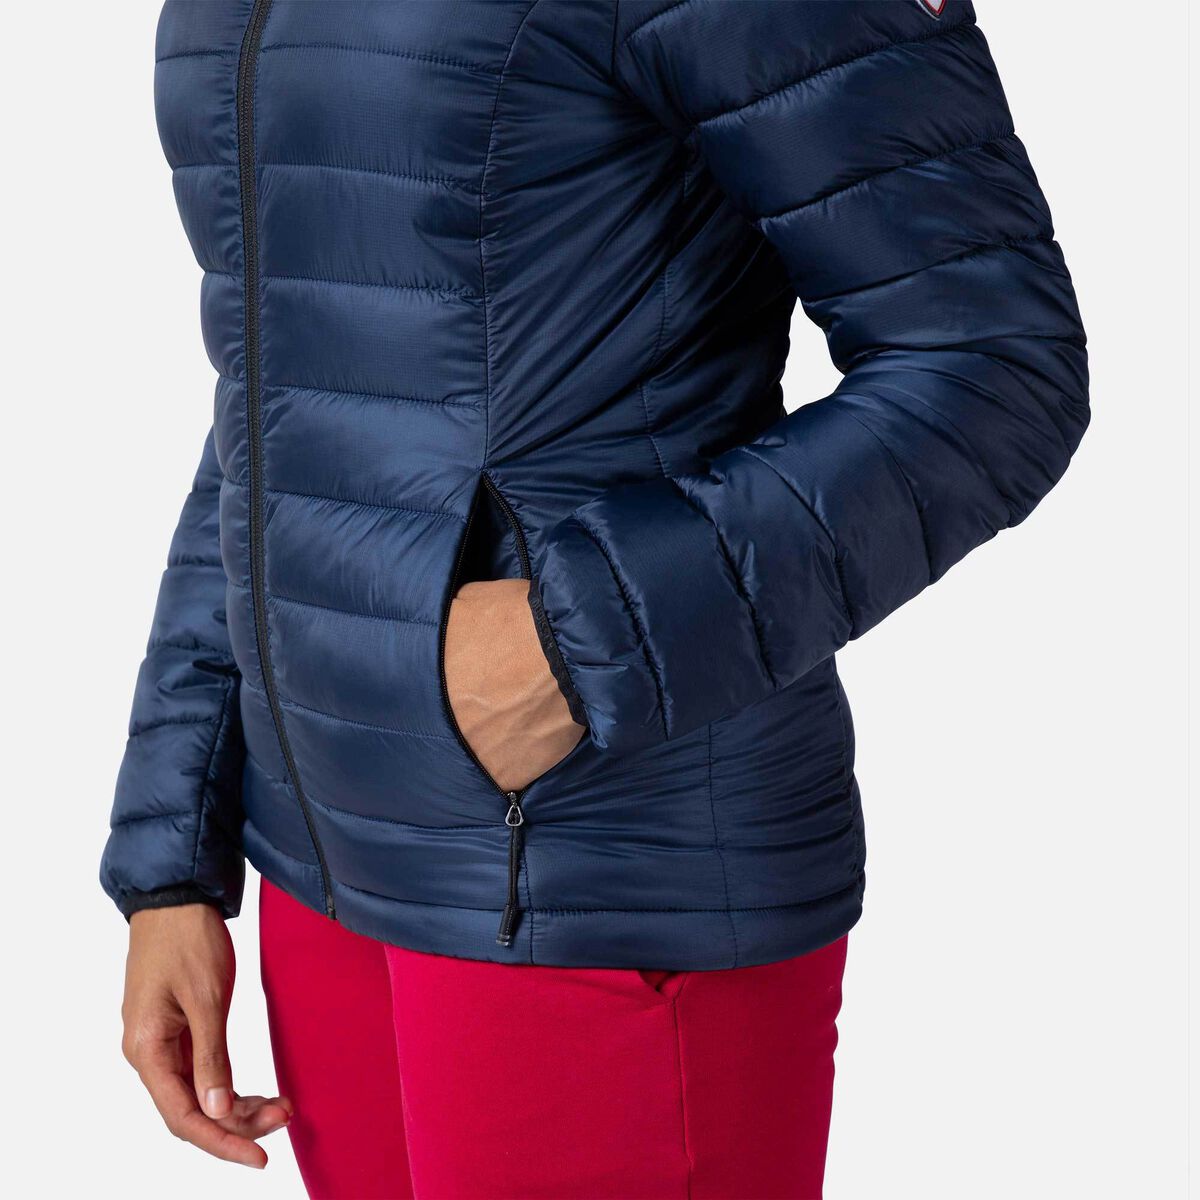 Women's insulated jacket 100GR